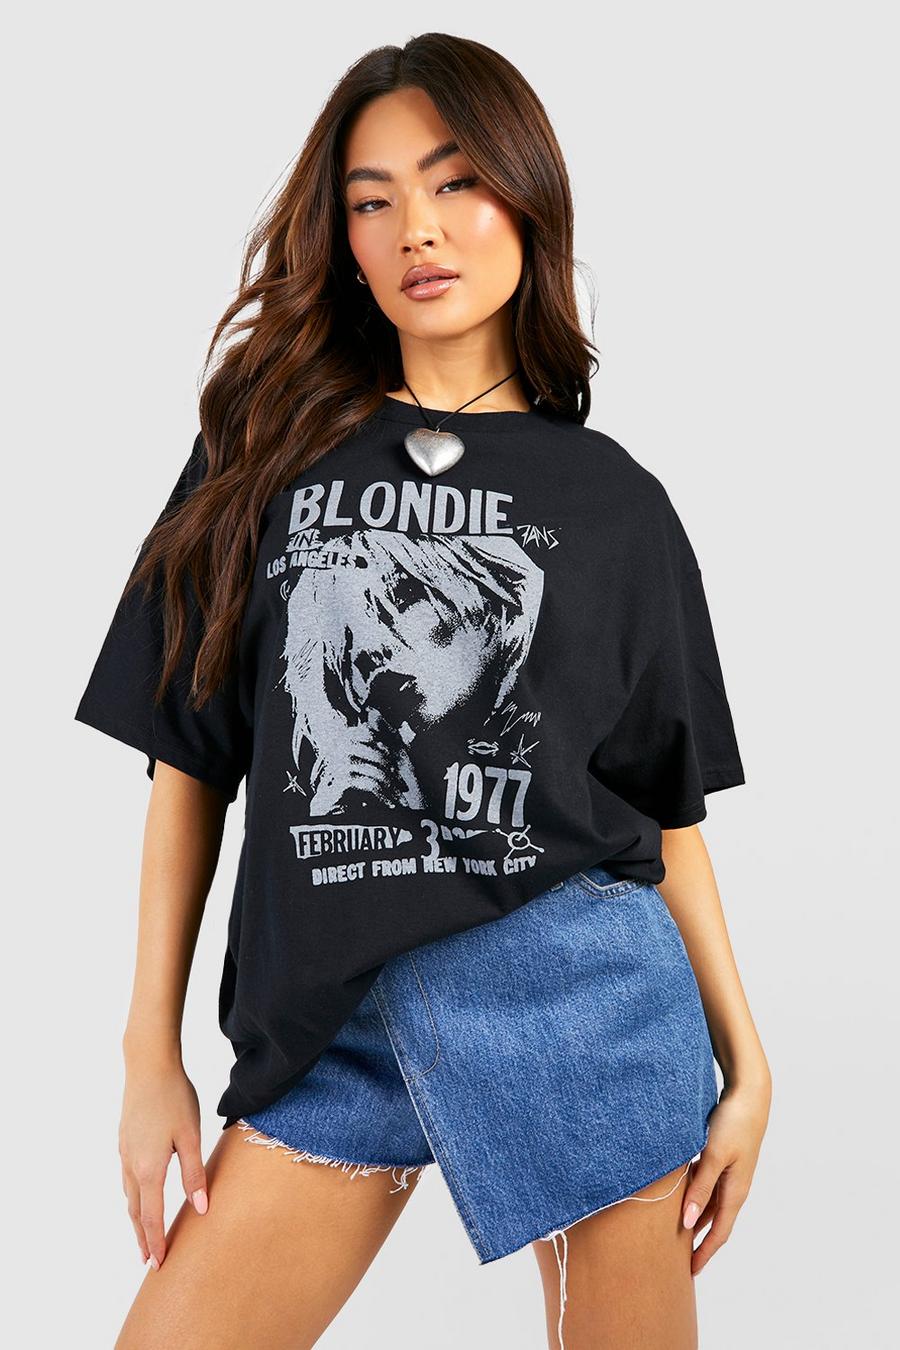 Camiseta oversize con estampado de grupo musical Blondie, Black